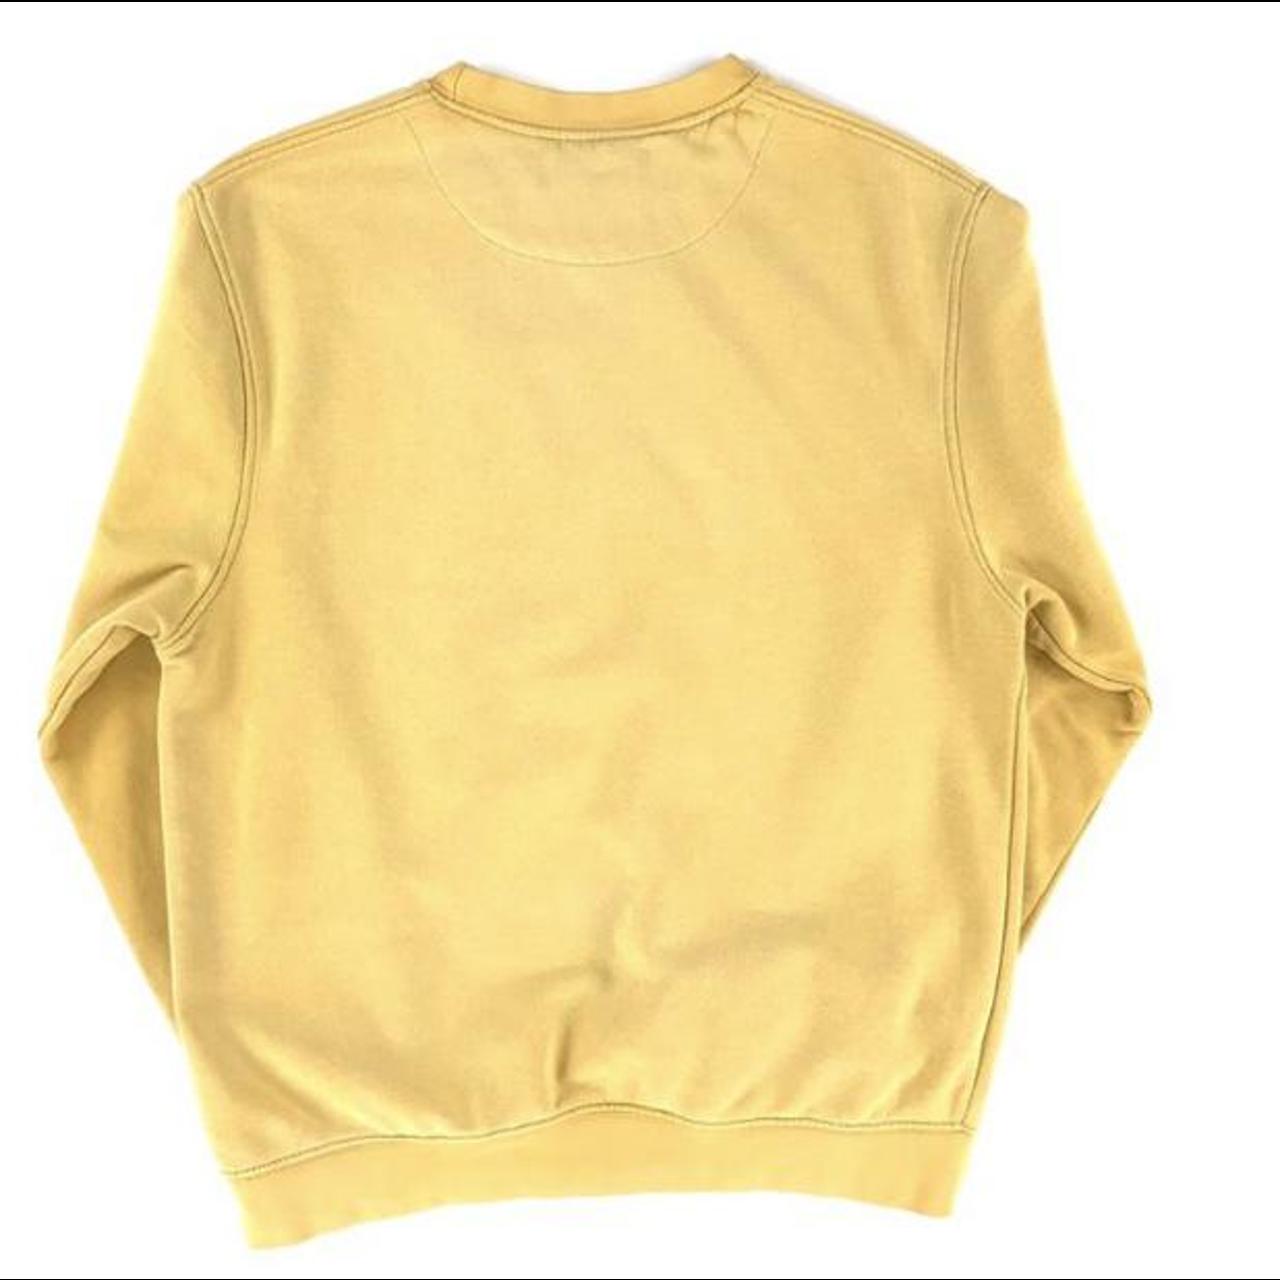 Nike retro vintage yellow jumper/ sweatshirt - spell... - Depop